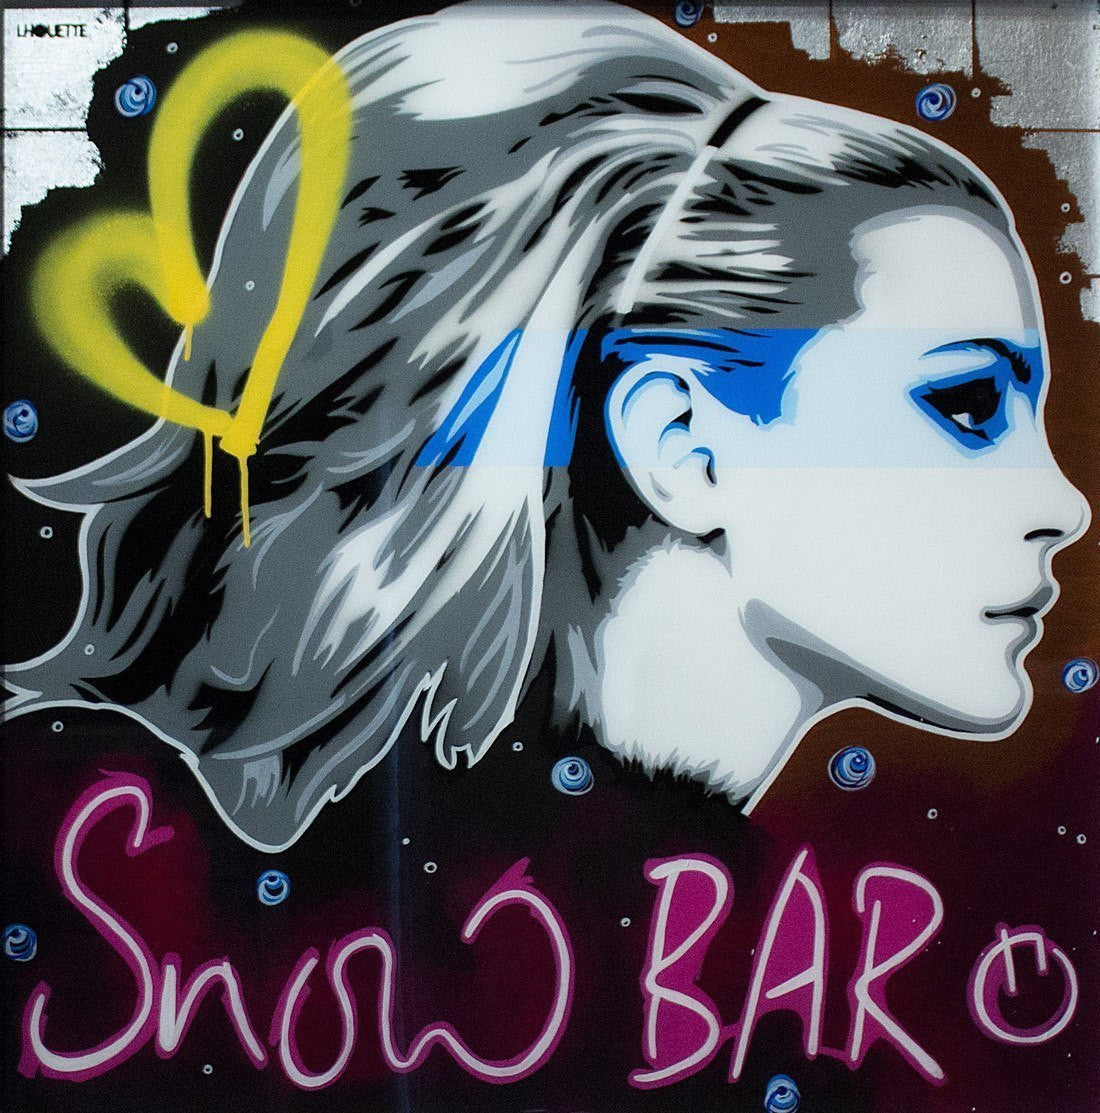 Snow Bar - SOLD Lhouette Snow Bar - SOLD